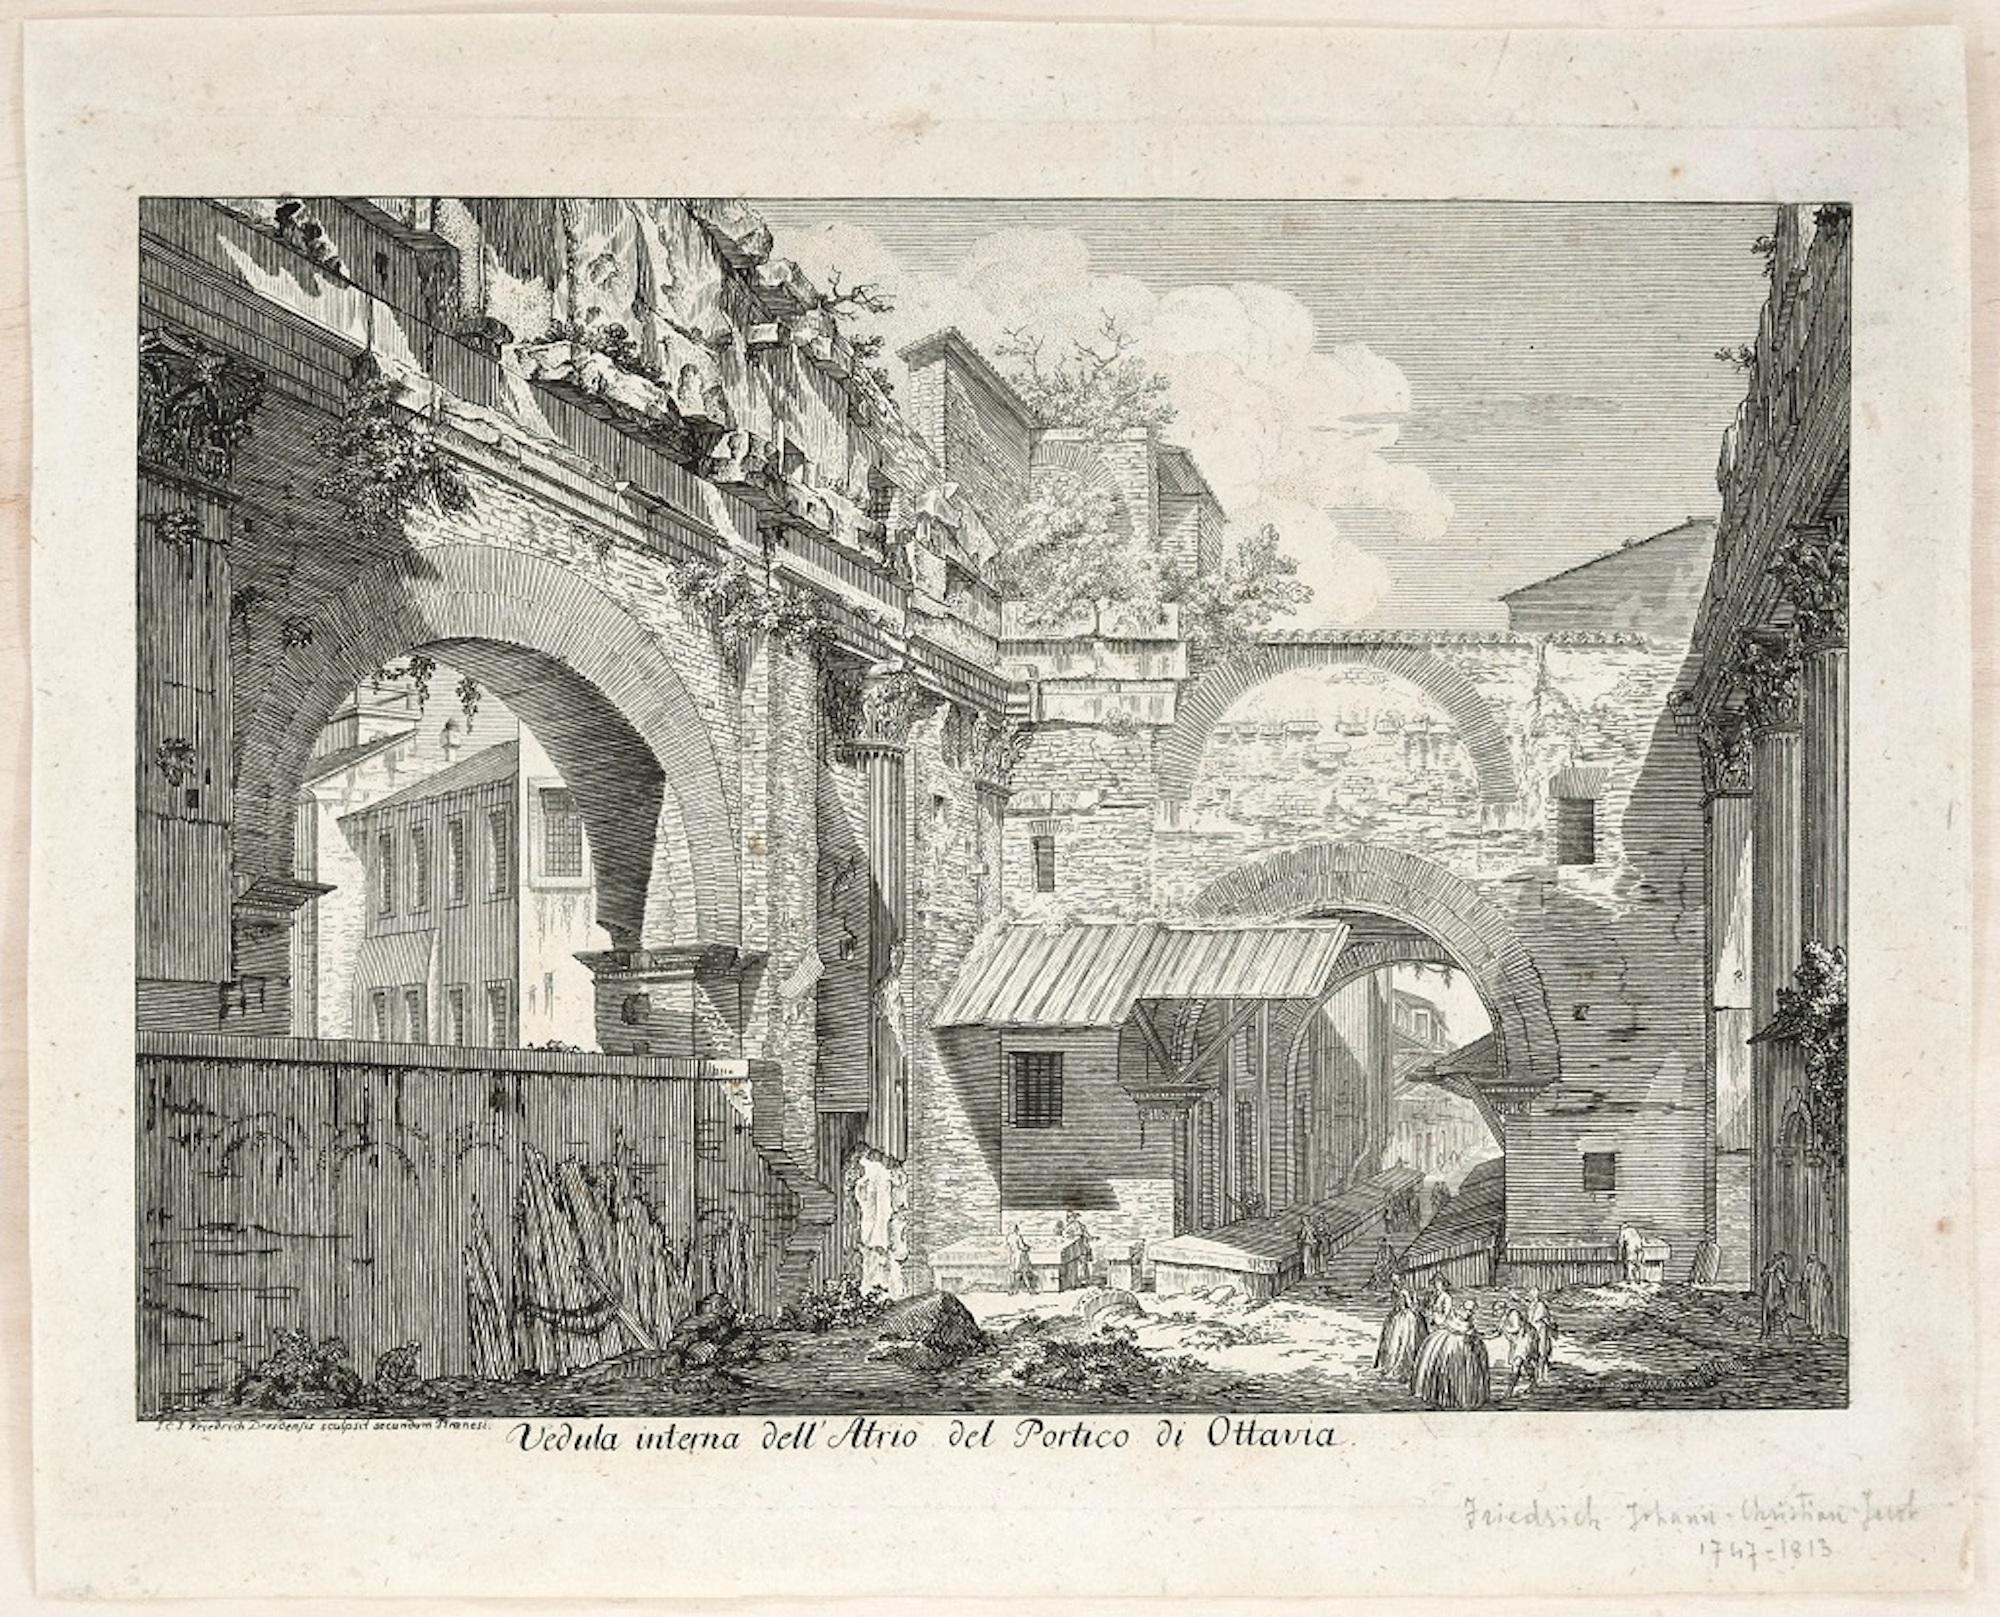 Johann-Christian-Jacob Friedrich Landscape Print - La Veduta interna dell’Atrio del Portico d’Ottavia - Etching After G.B. Piranesi